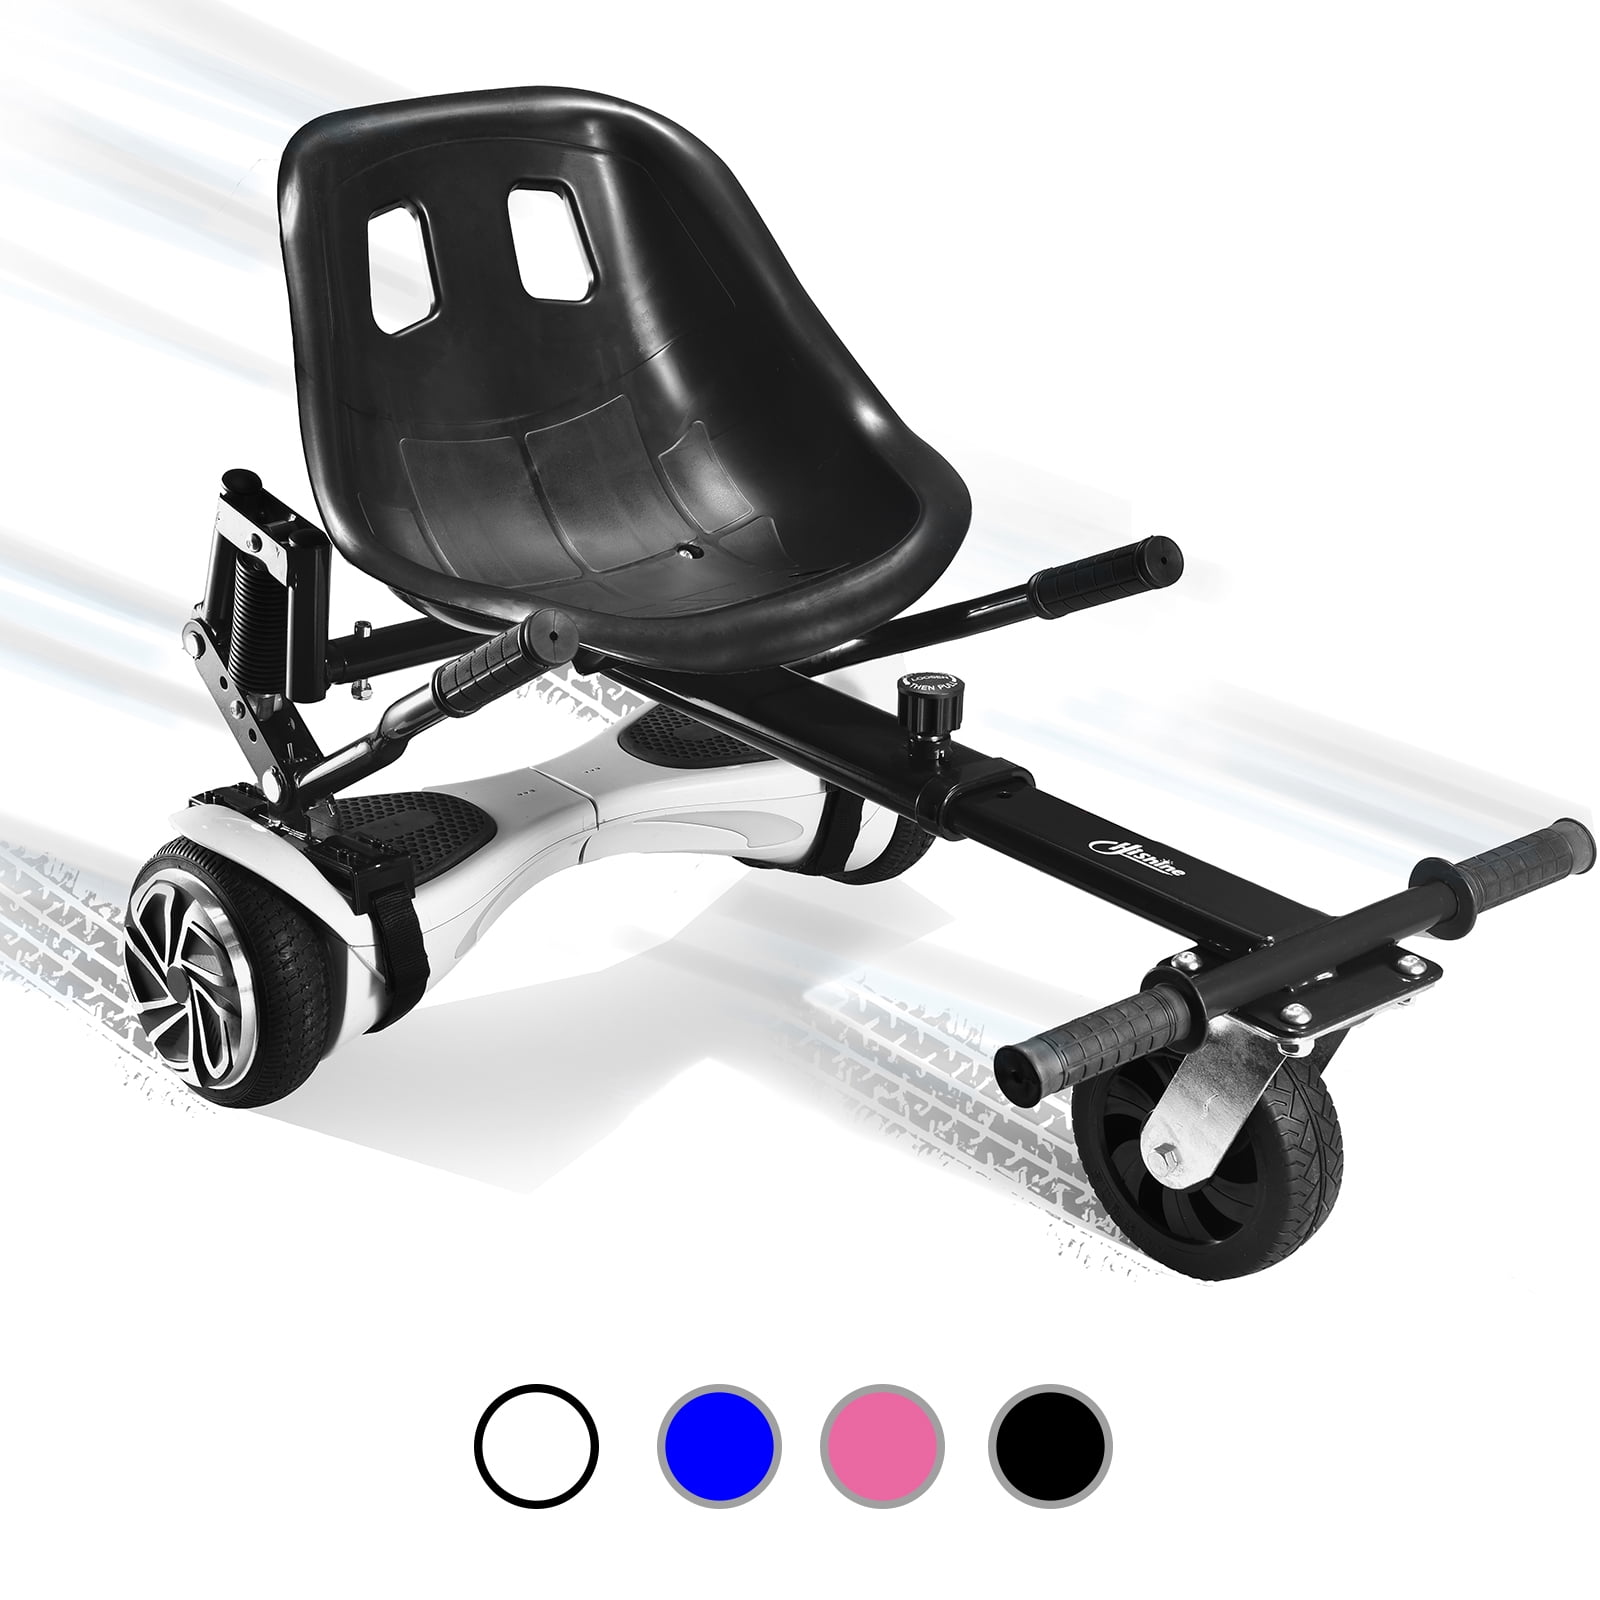 HOT SALE Hoverkart Go Kart Seat For Segway Balancing Board Hover board Scooter 